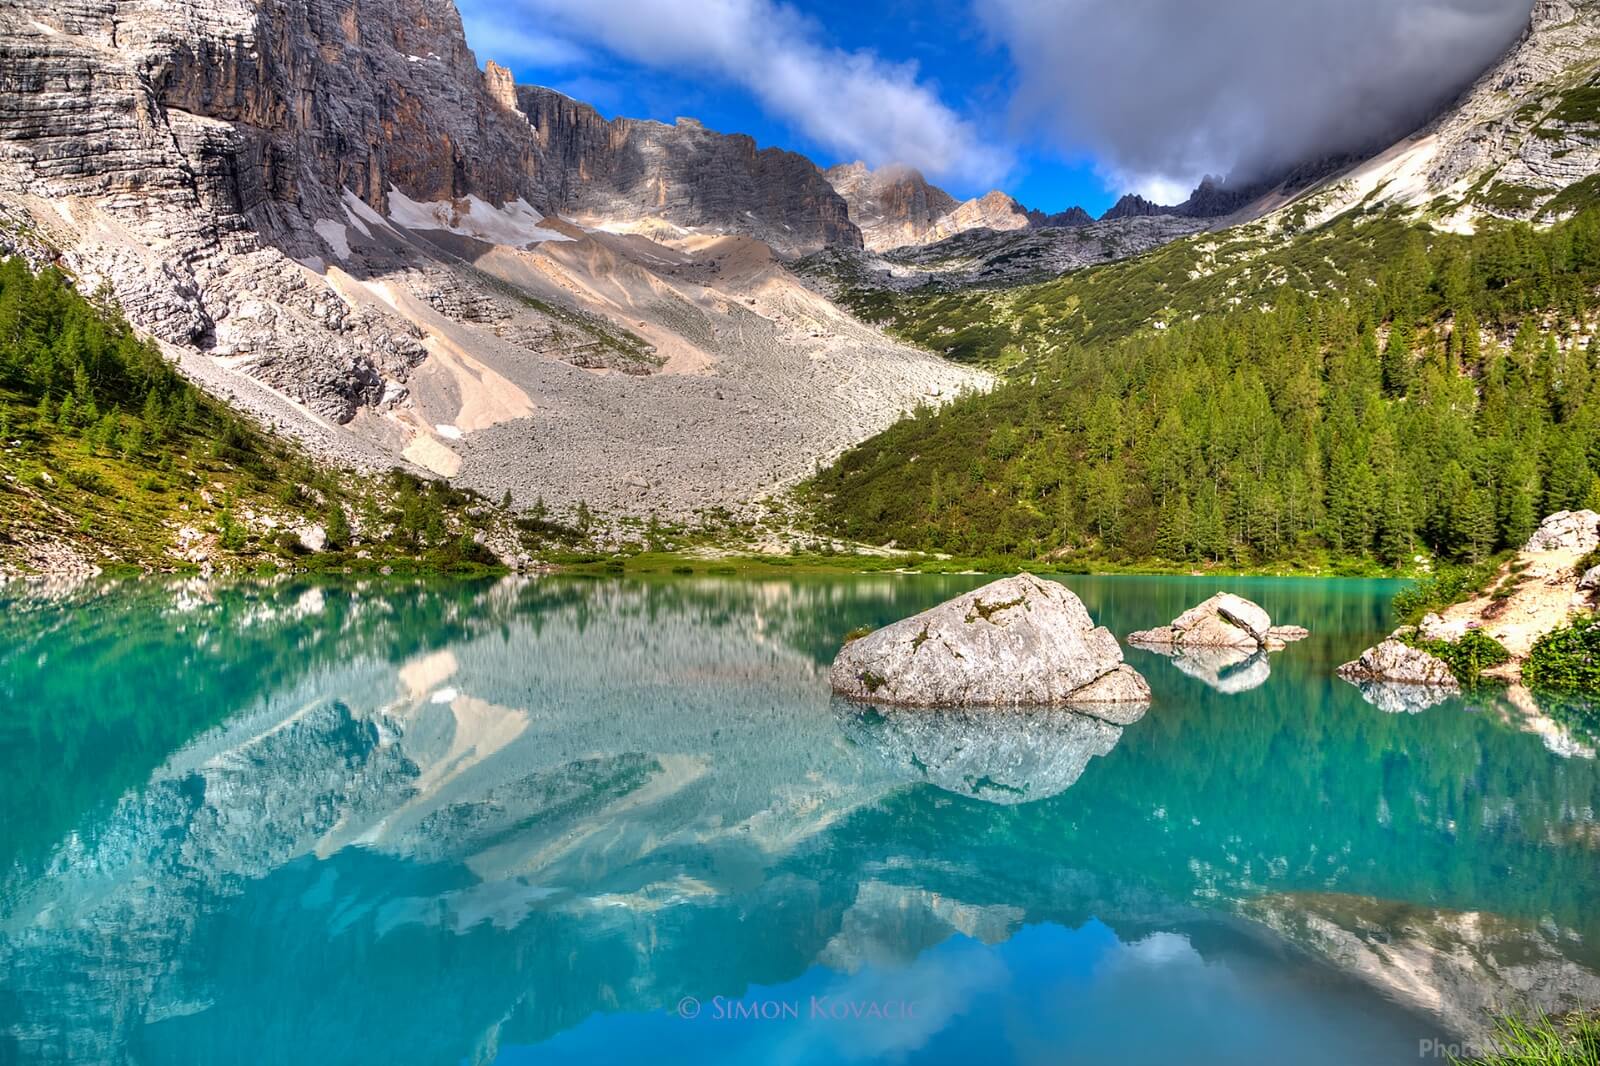 Image of Lago di Sorapis (Lake Sorapis) by Simon Kovacic